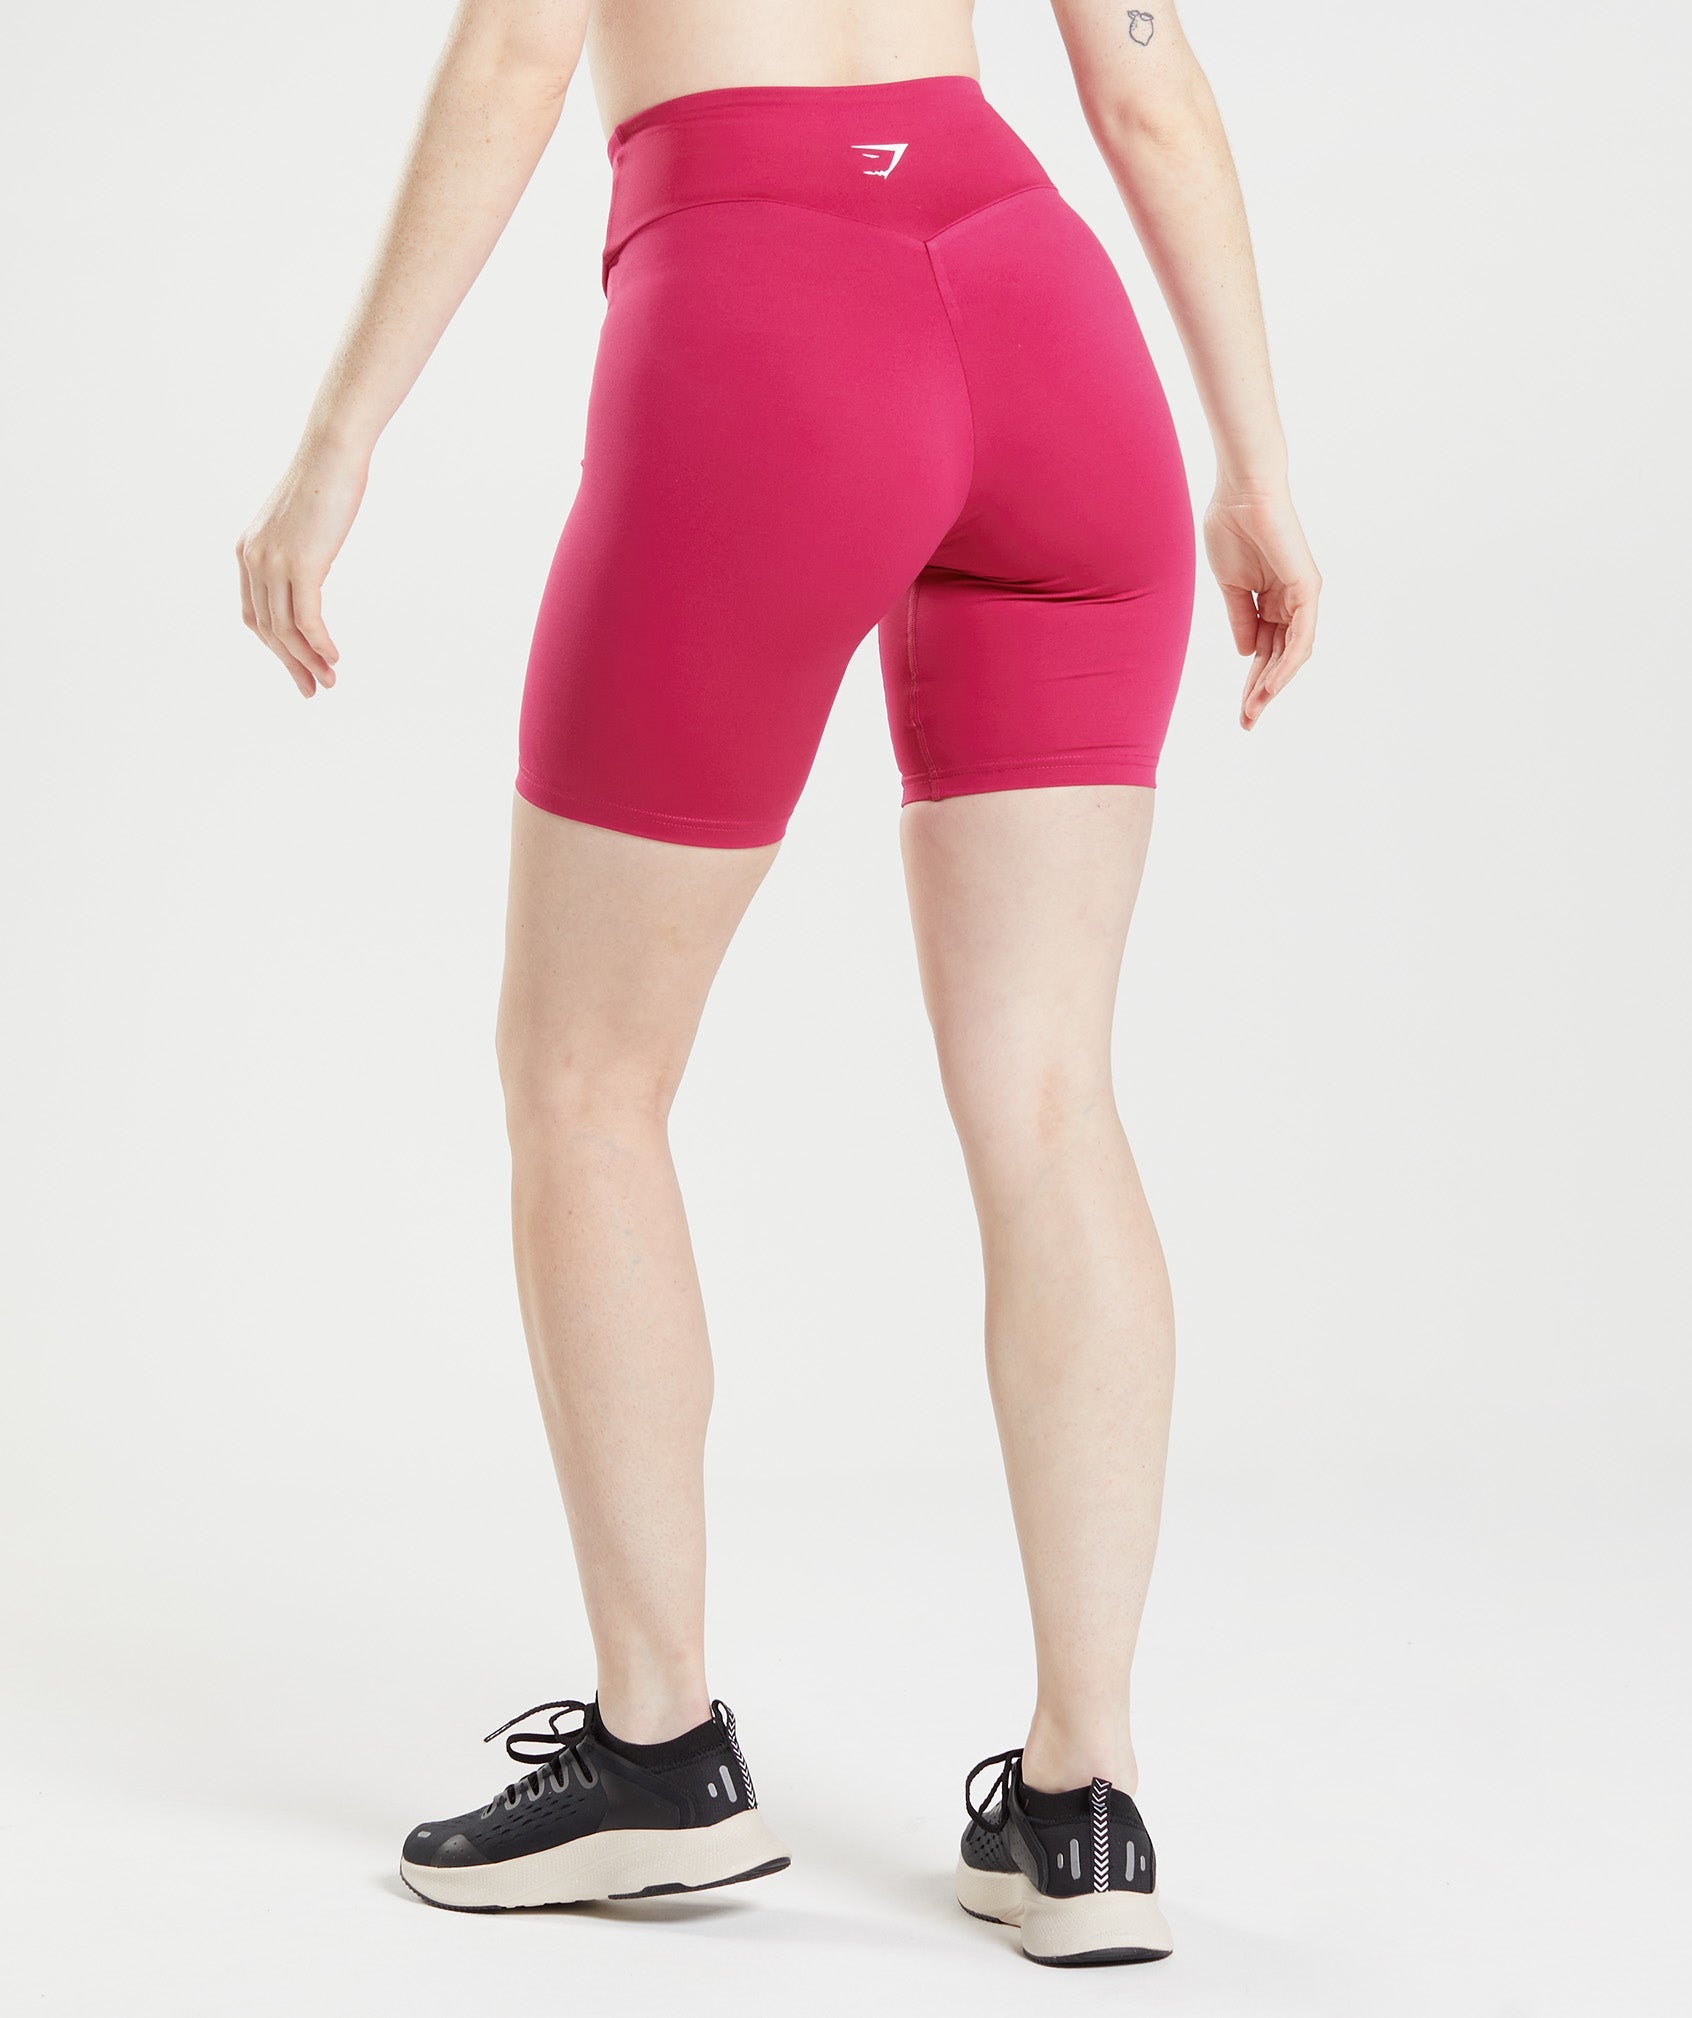 Training Cycling Shorts in Magenta Pink